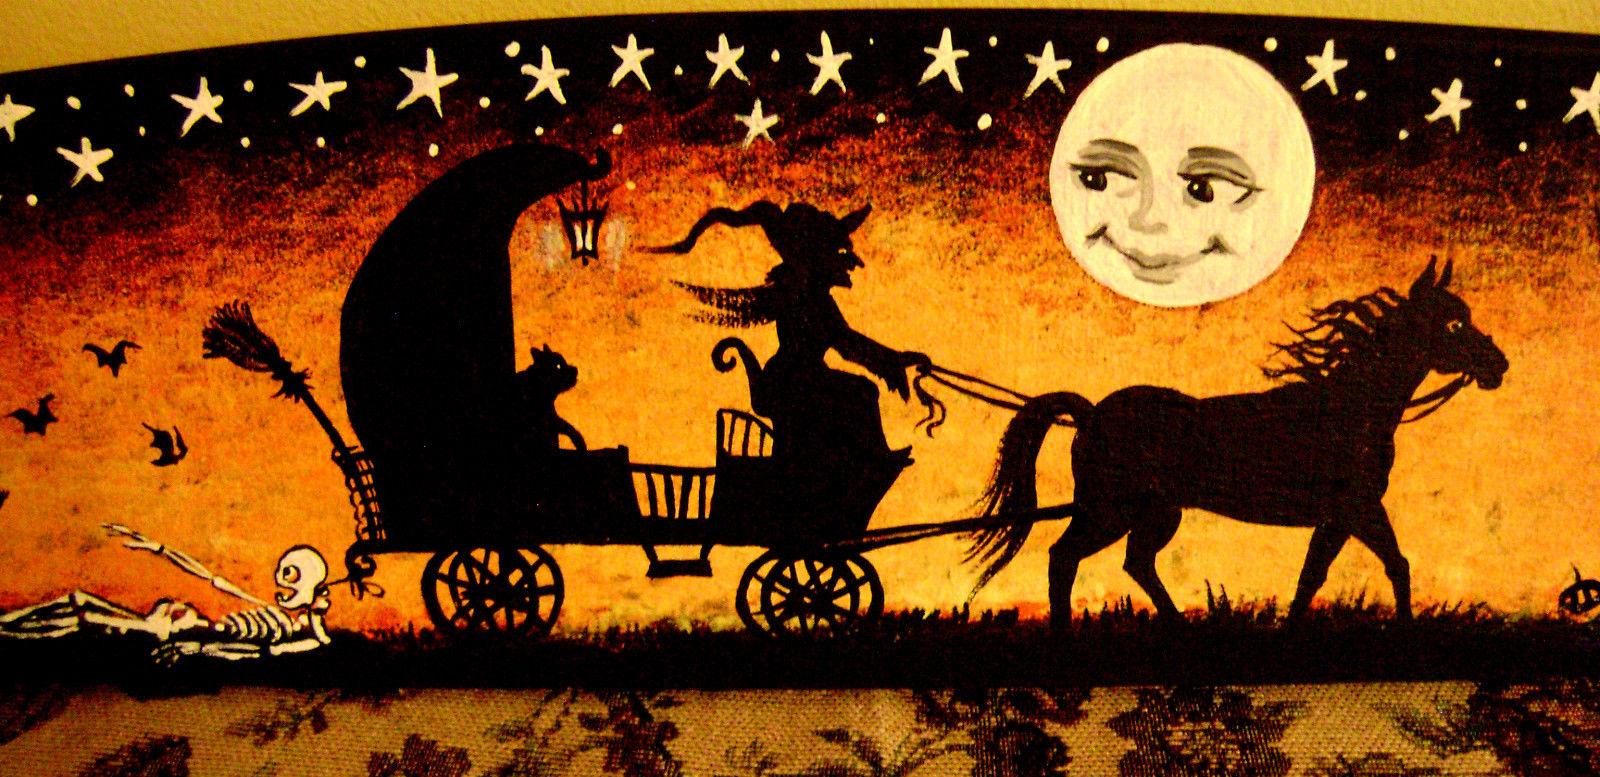 Retro Halloween Night Wallpaper Theme